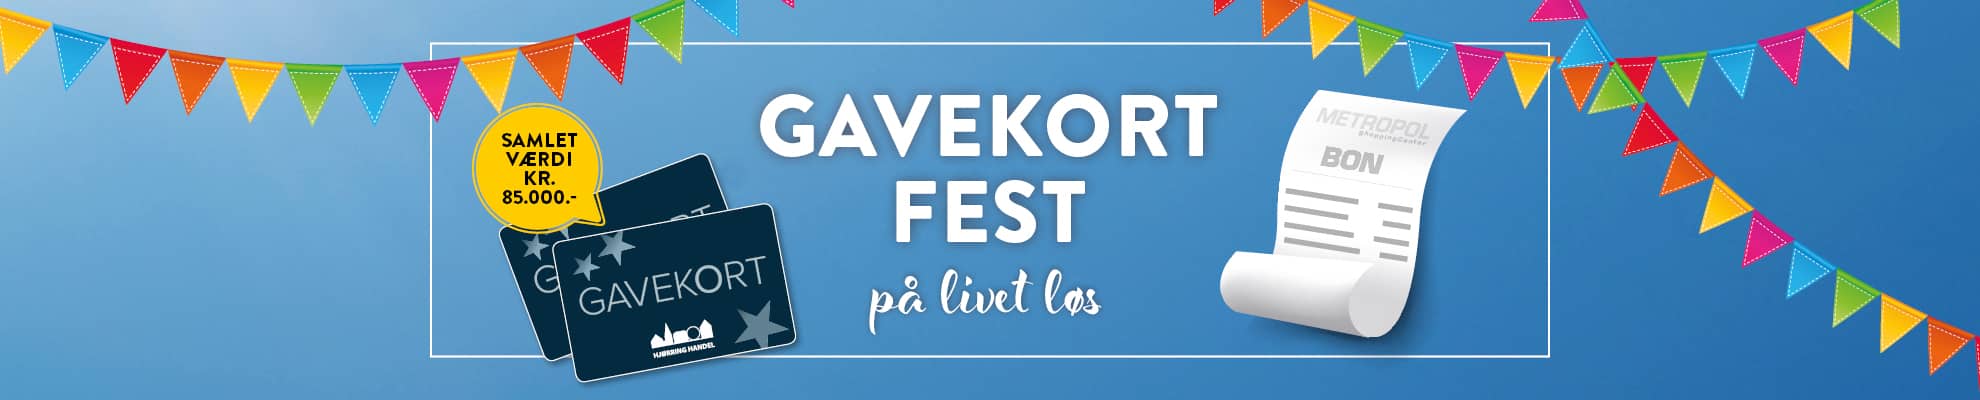 Gavekortfest